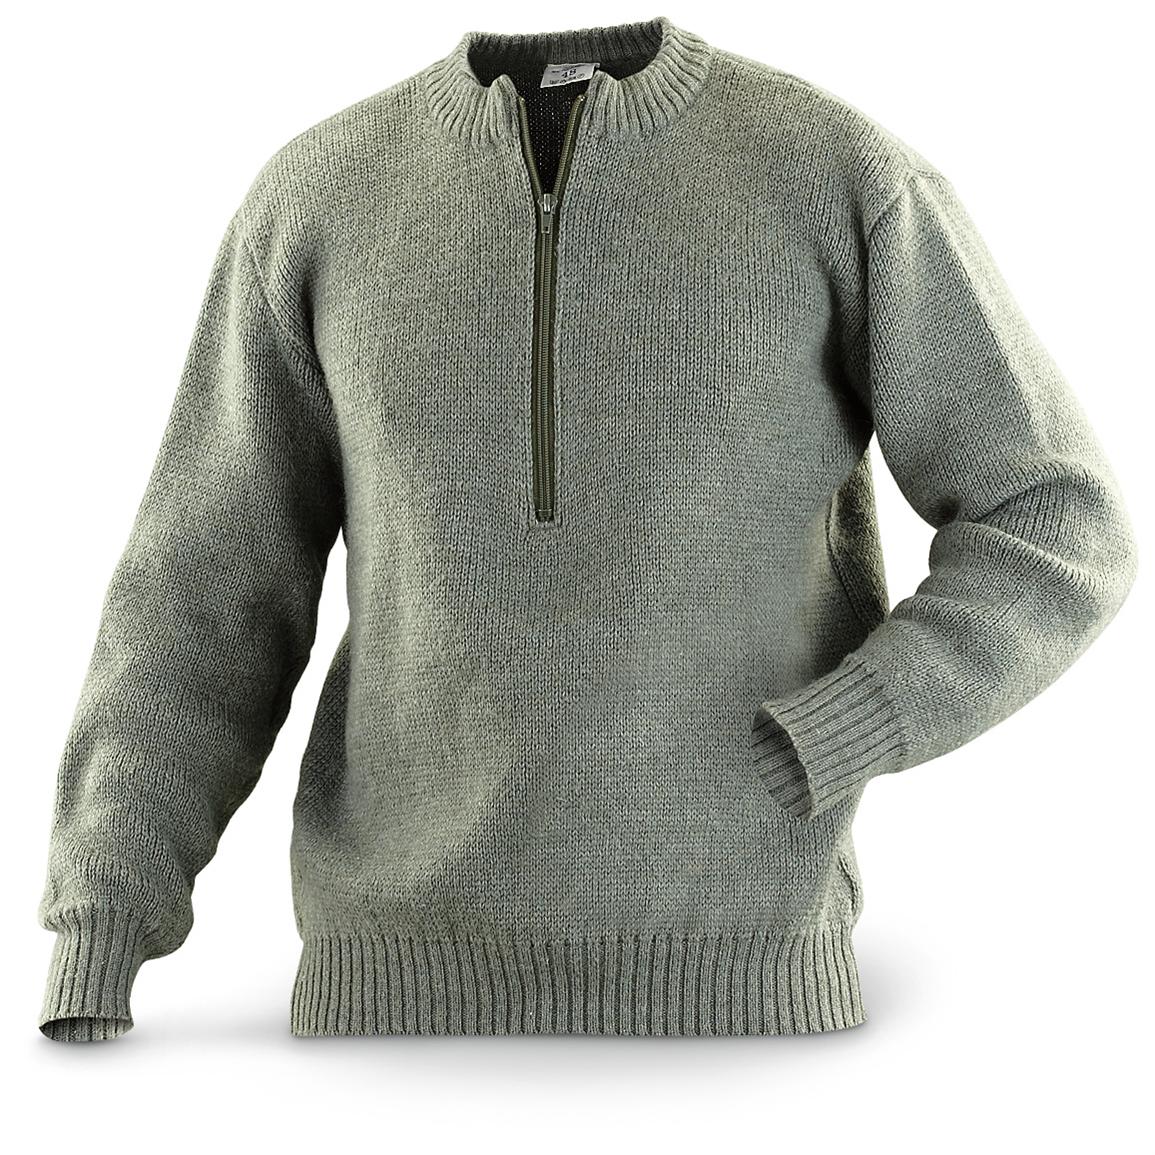 Swiss Military Surplus Heavyweight Wool Sweater, Used